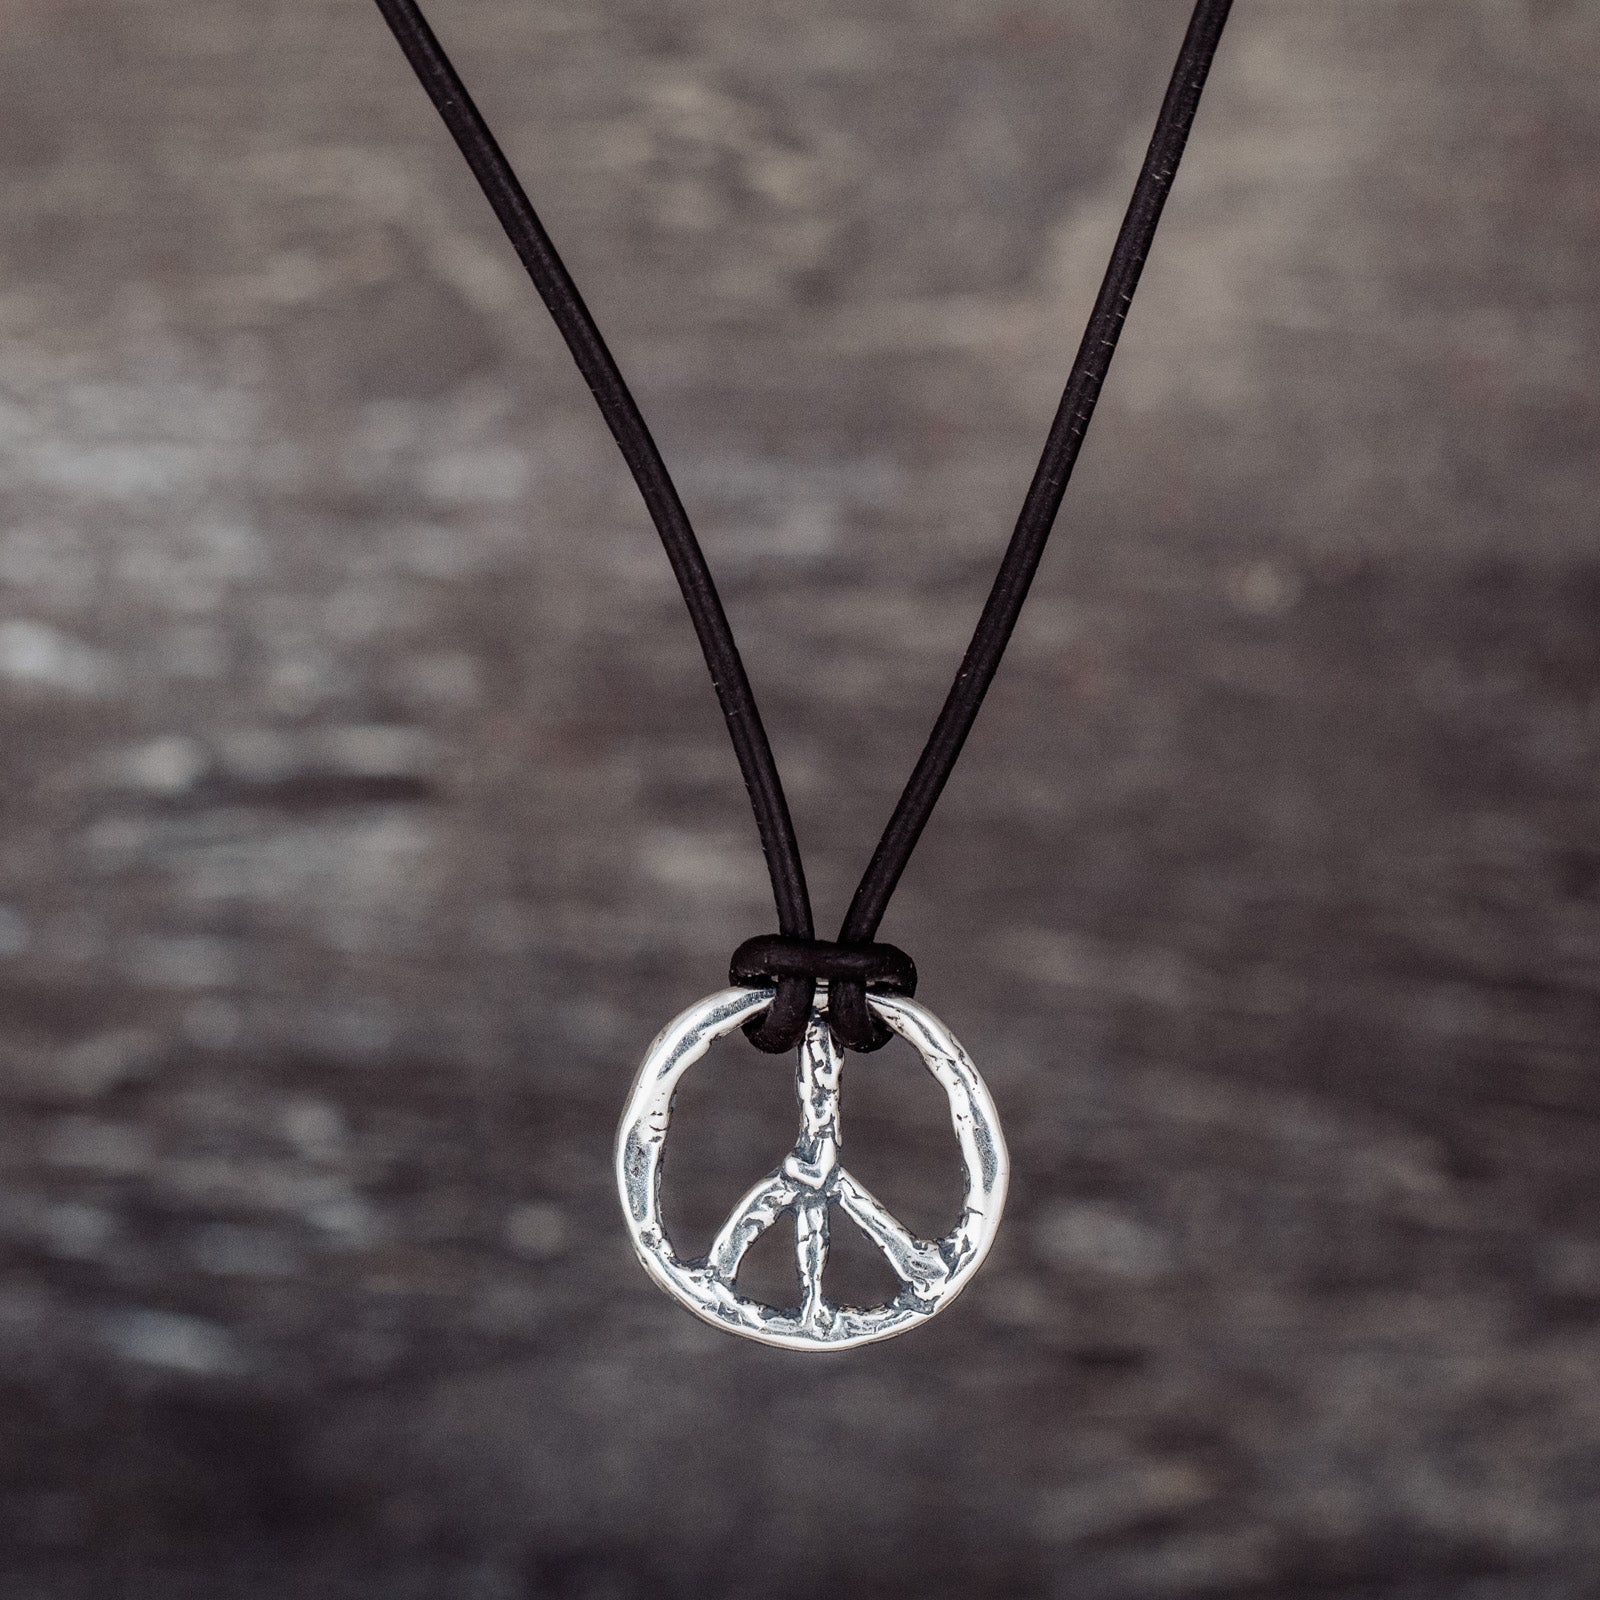 Buy Peace Symbol Necklace - Peace Sign Pendant Rasta Hippie Hemp Hawaiian,  Metal Leather, No Gemstone at Amazon.in